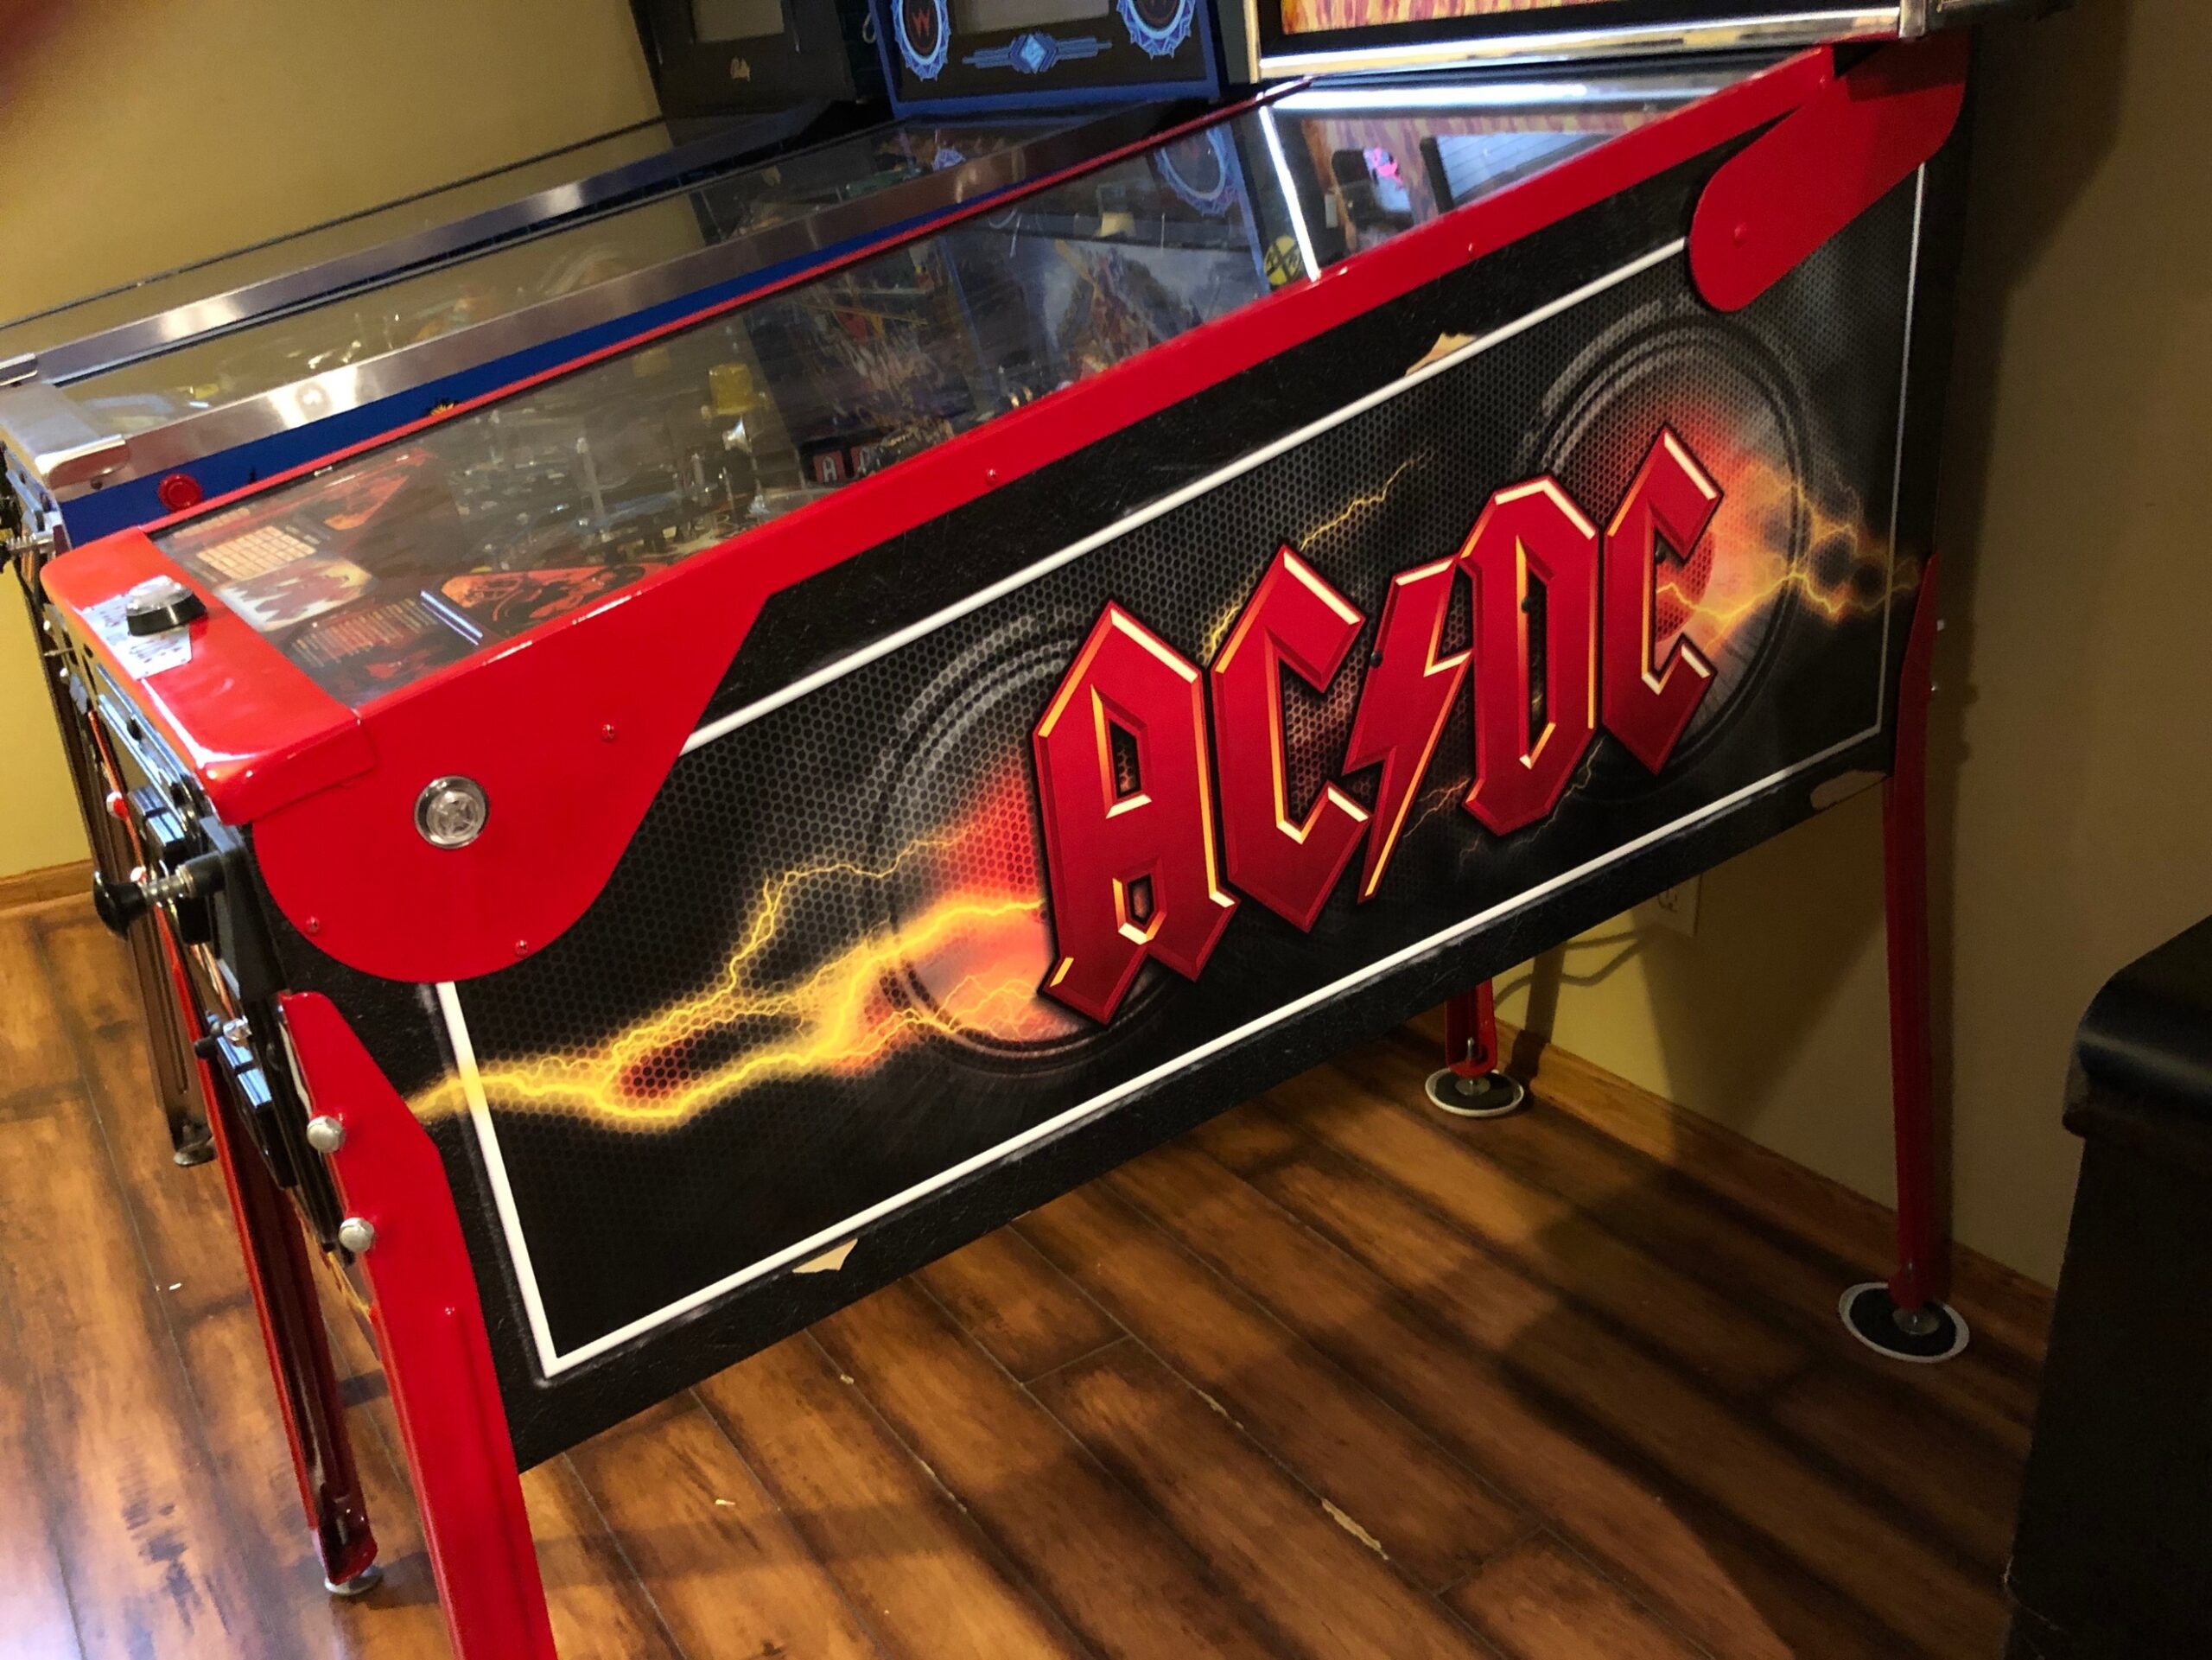 Buy AC/DC Premium Pinball Machine by Stern Online at $14999